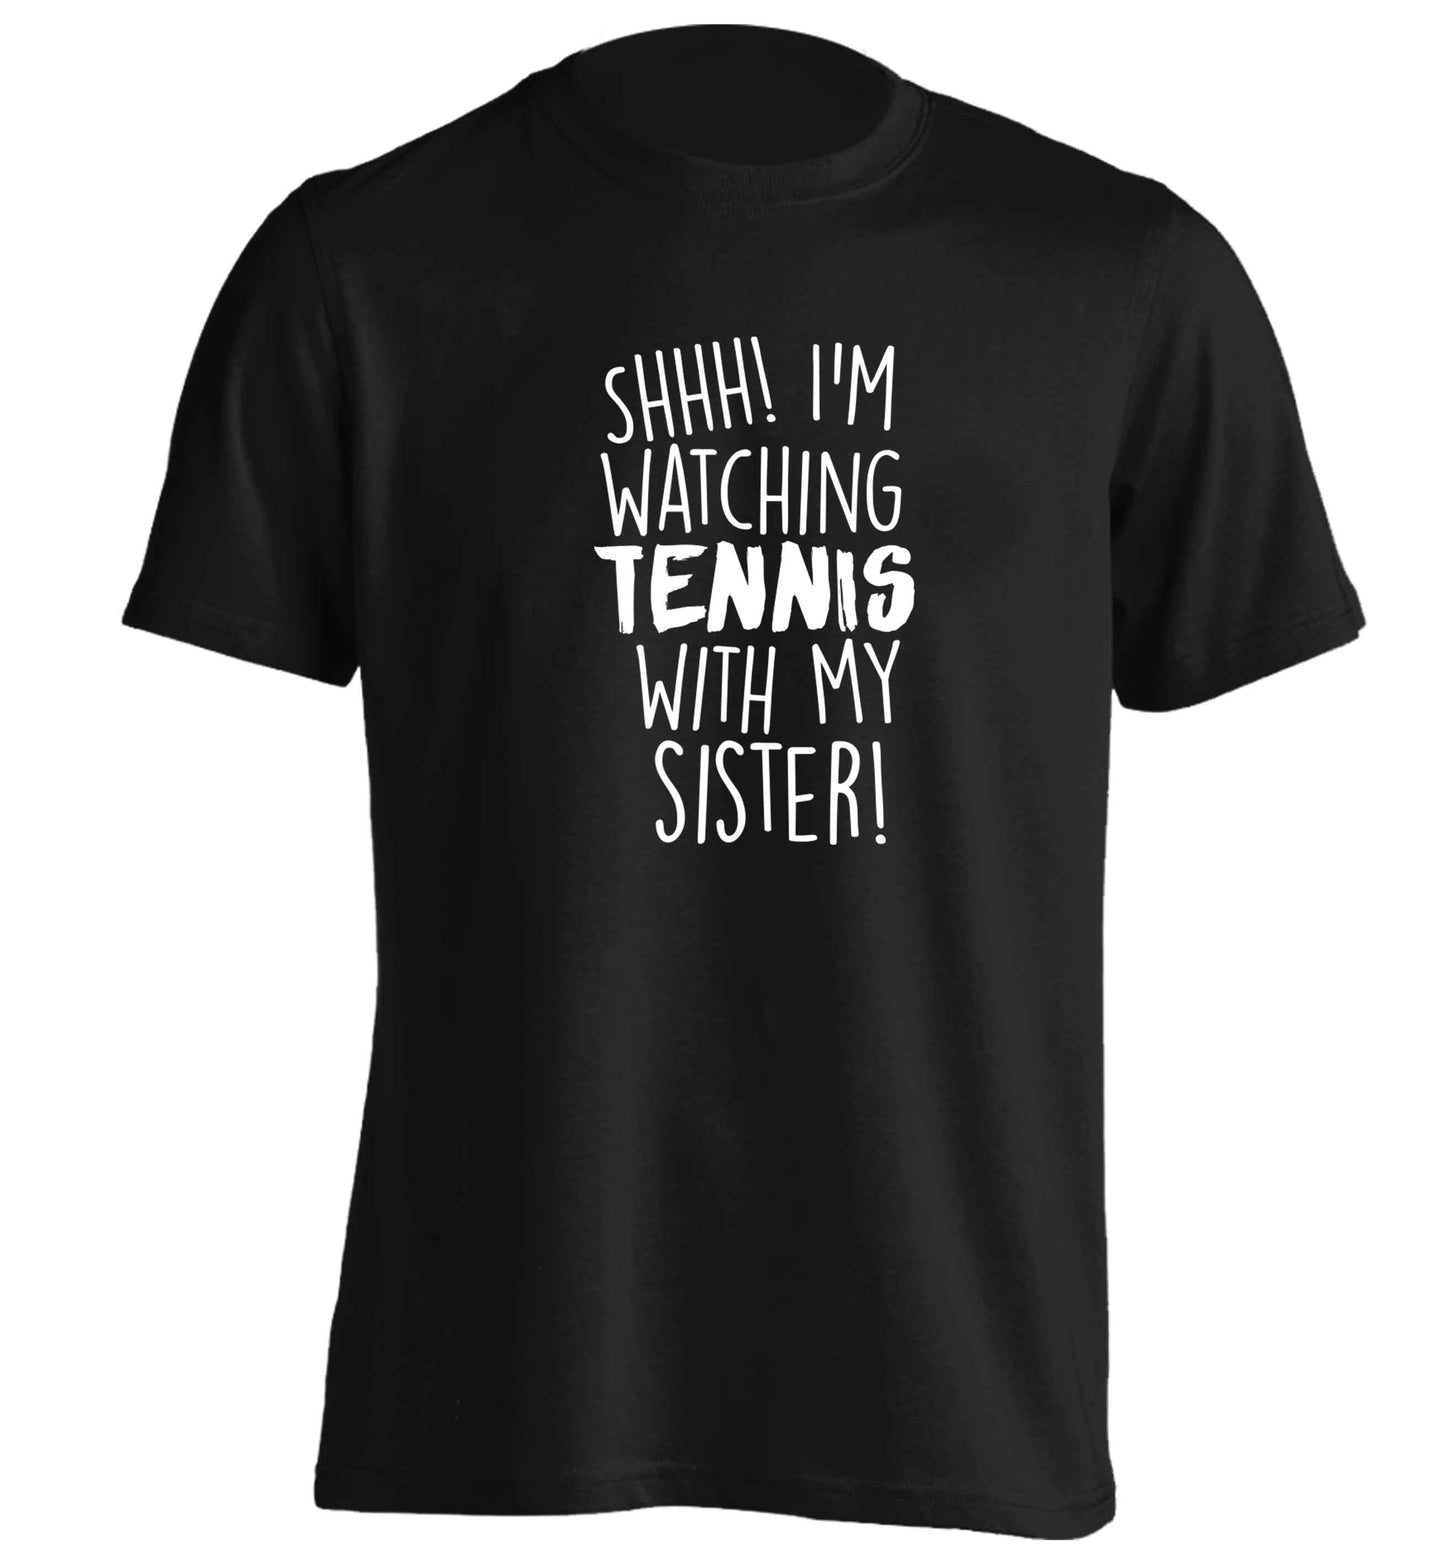 Shh! I'm watching tennis with my sister! adults unisex black Tshirt 2XL